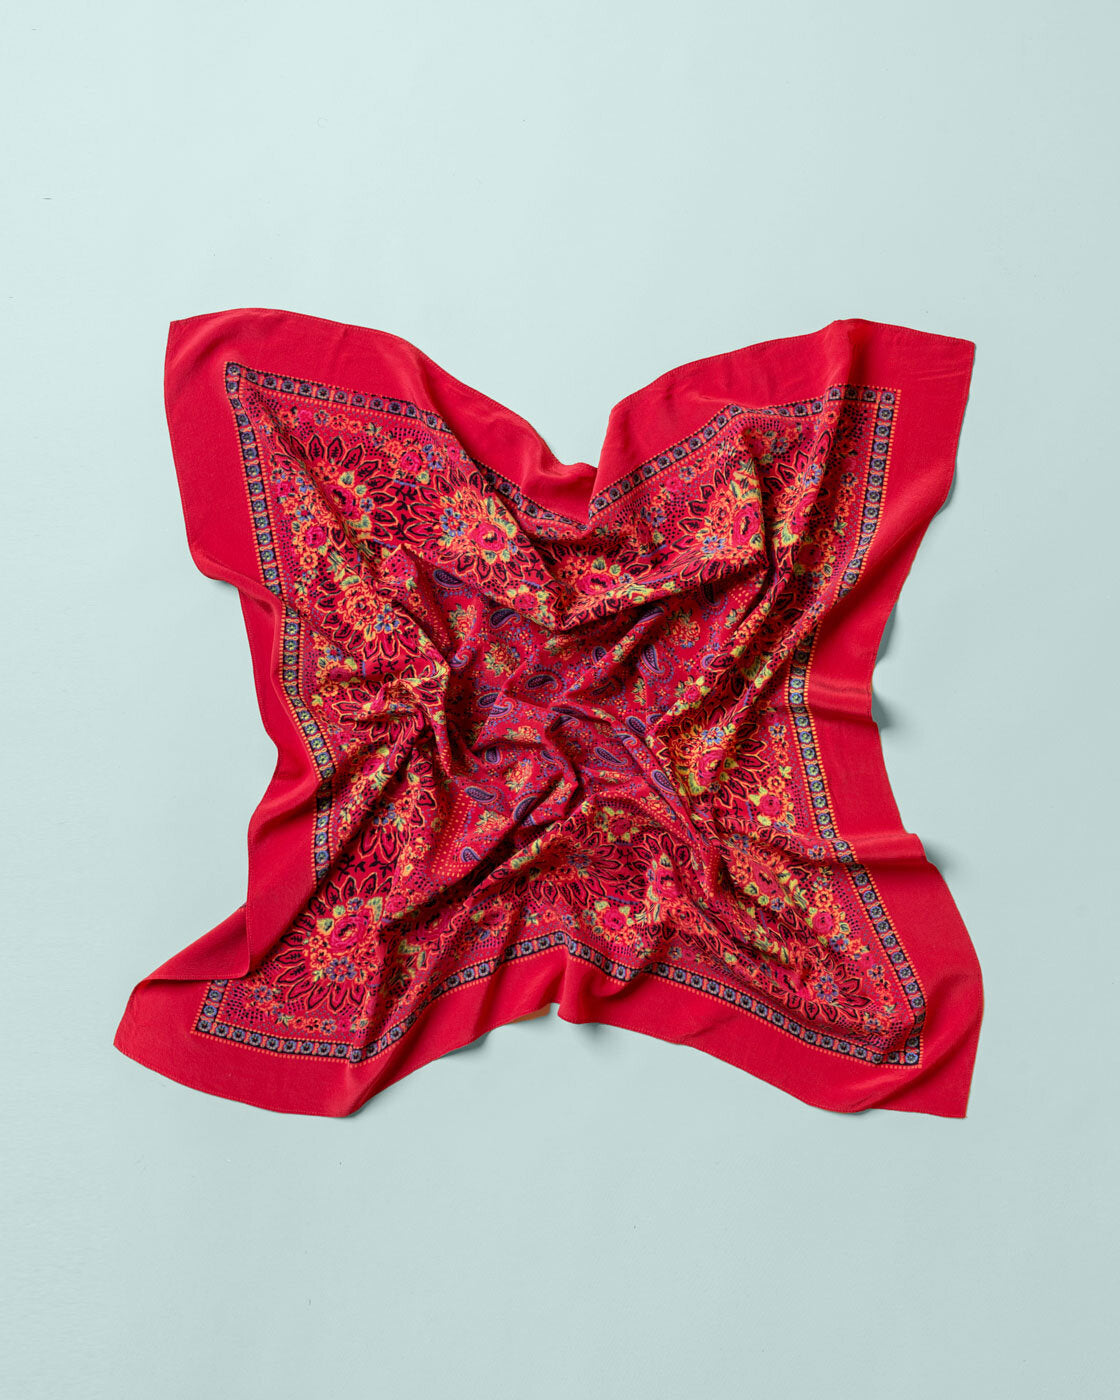 Silk foulard with traditional Balkan floral motifs